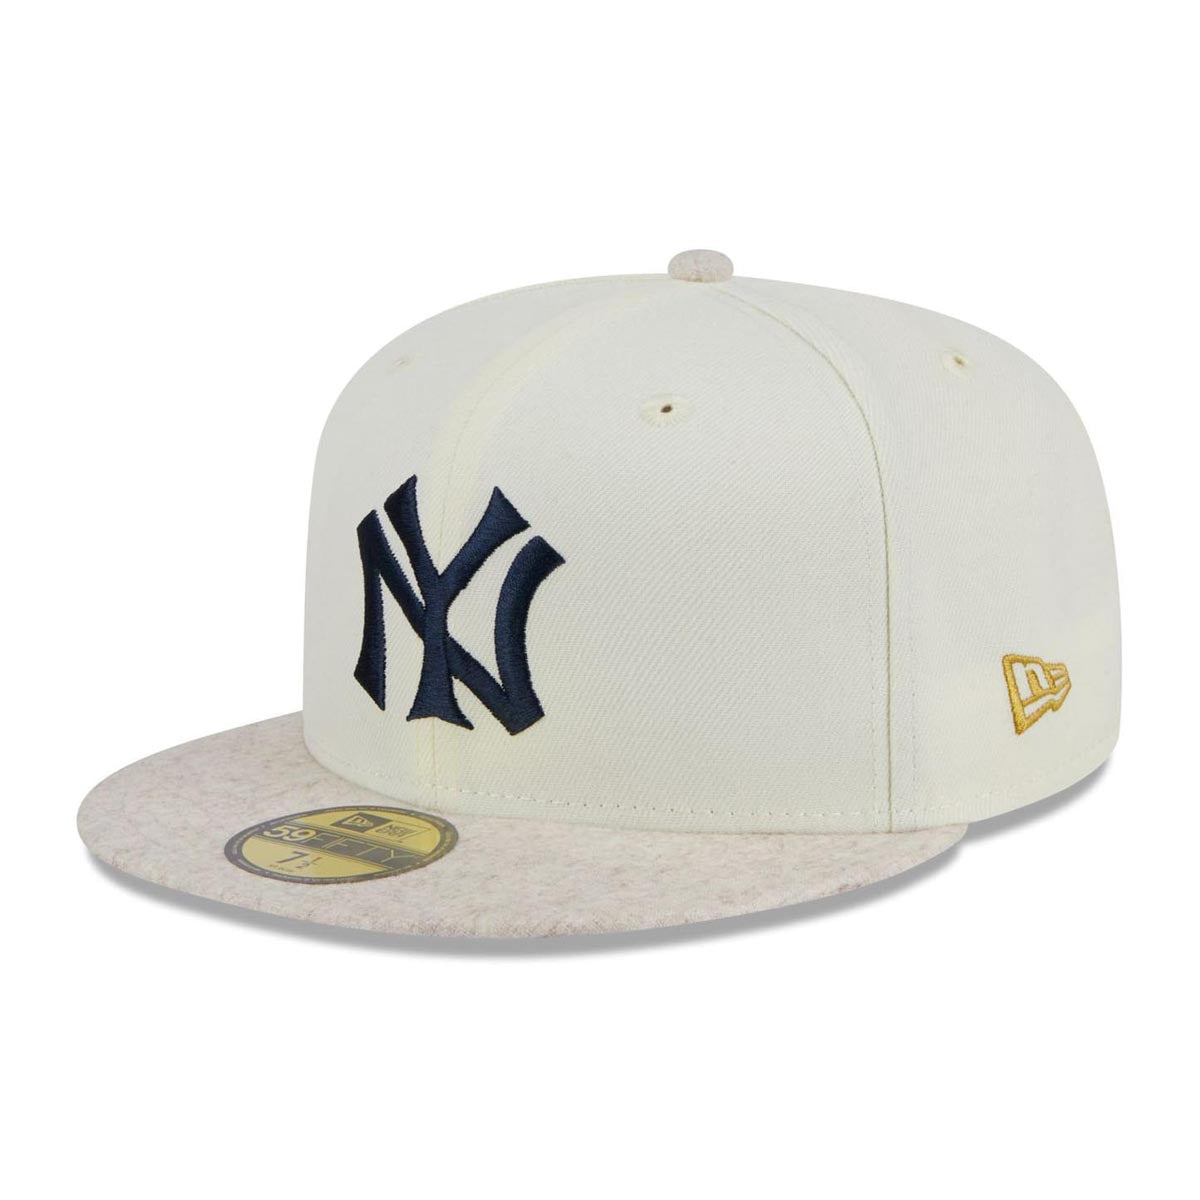 New Era 5950 Match-up Hat - New York Yankees image 1